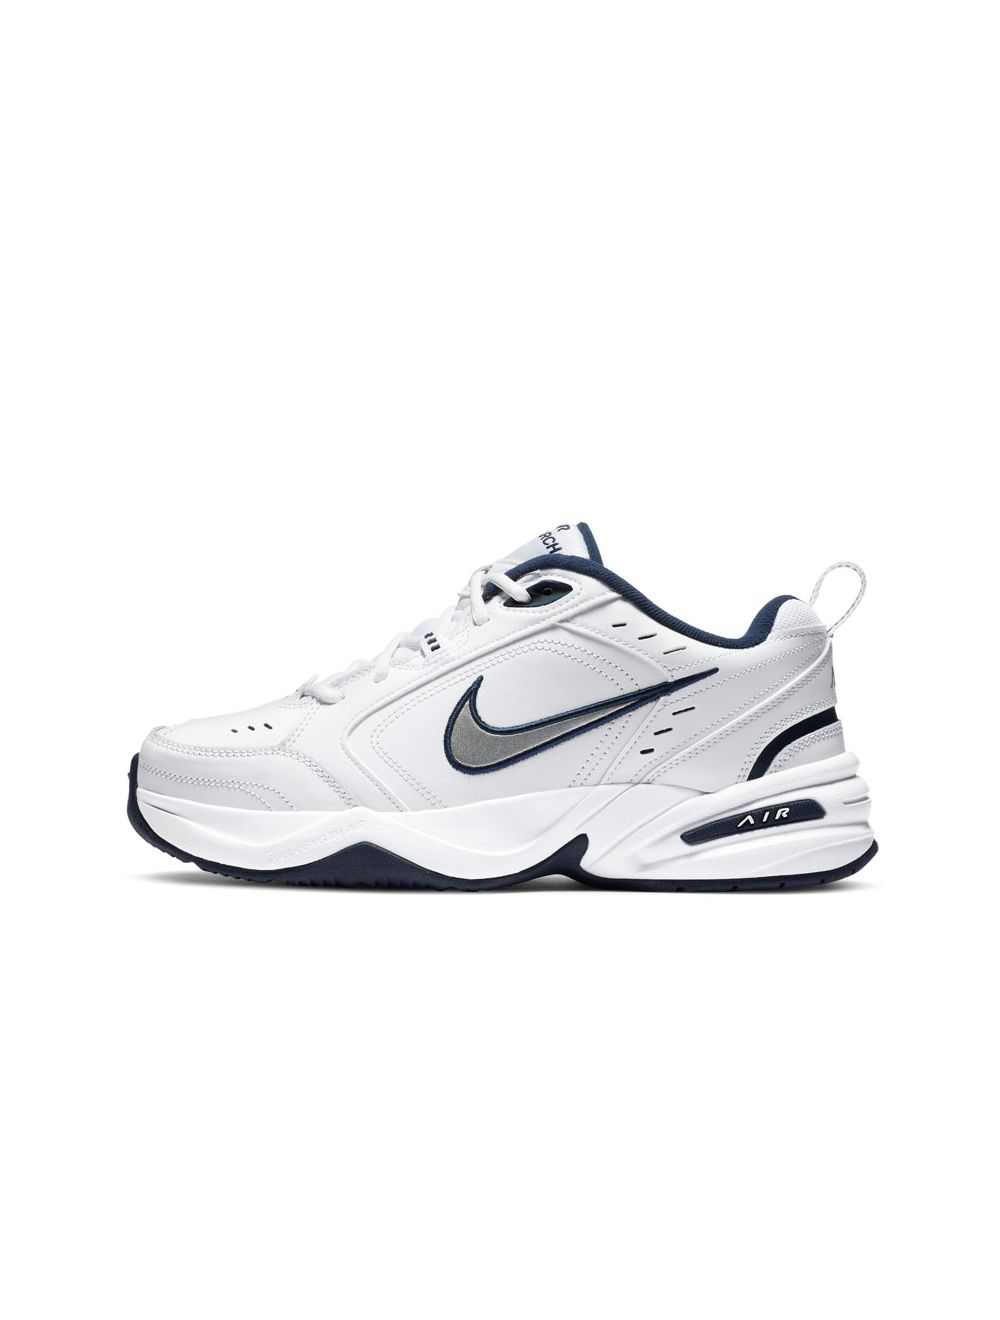 Shop Nike Air Monarch IV Mens Shoes White/Silver | Studio 88